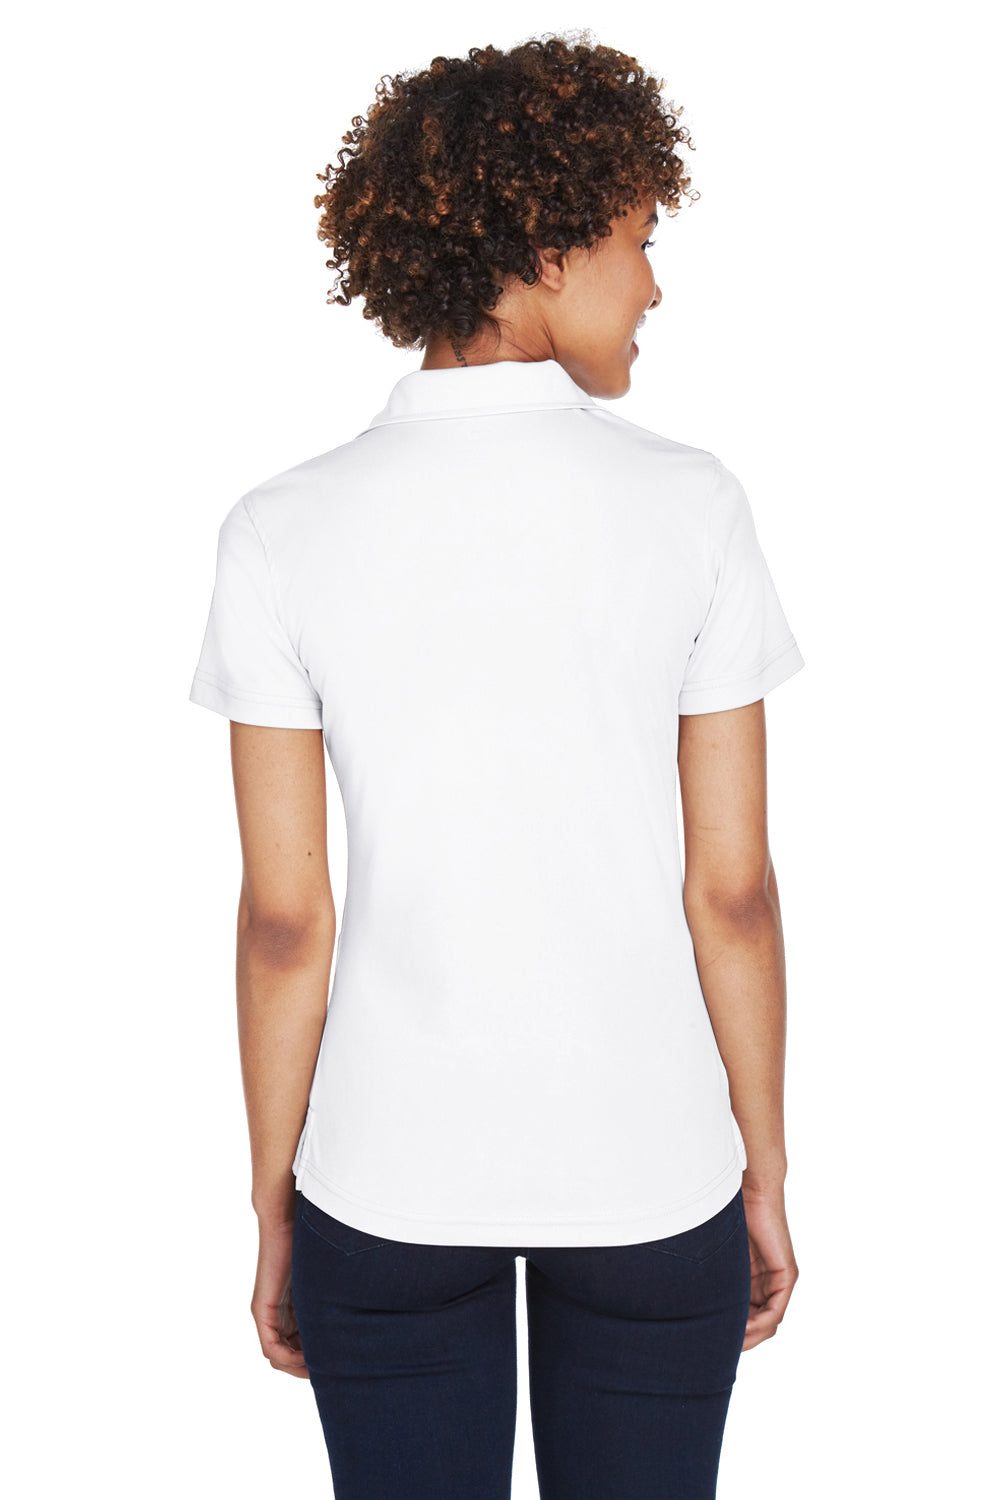 UltraClub 8425L Womens Cool & Dry Performance Moisture Wicking Short Sleeve Polo Shirt White Back